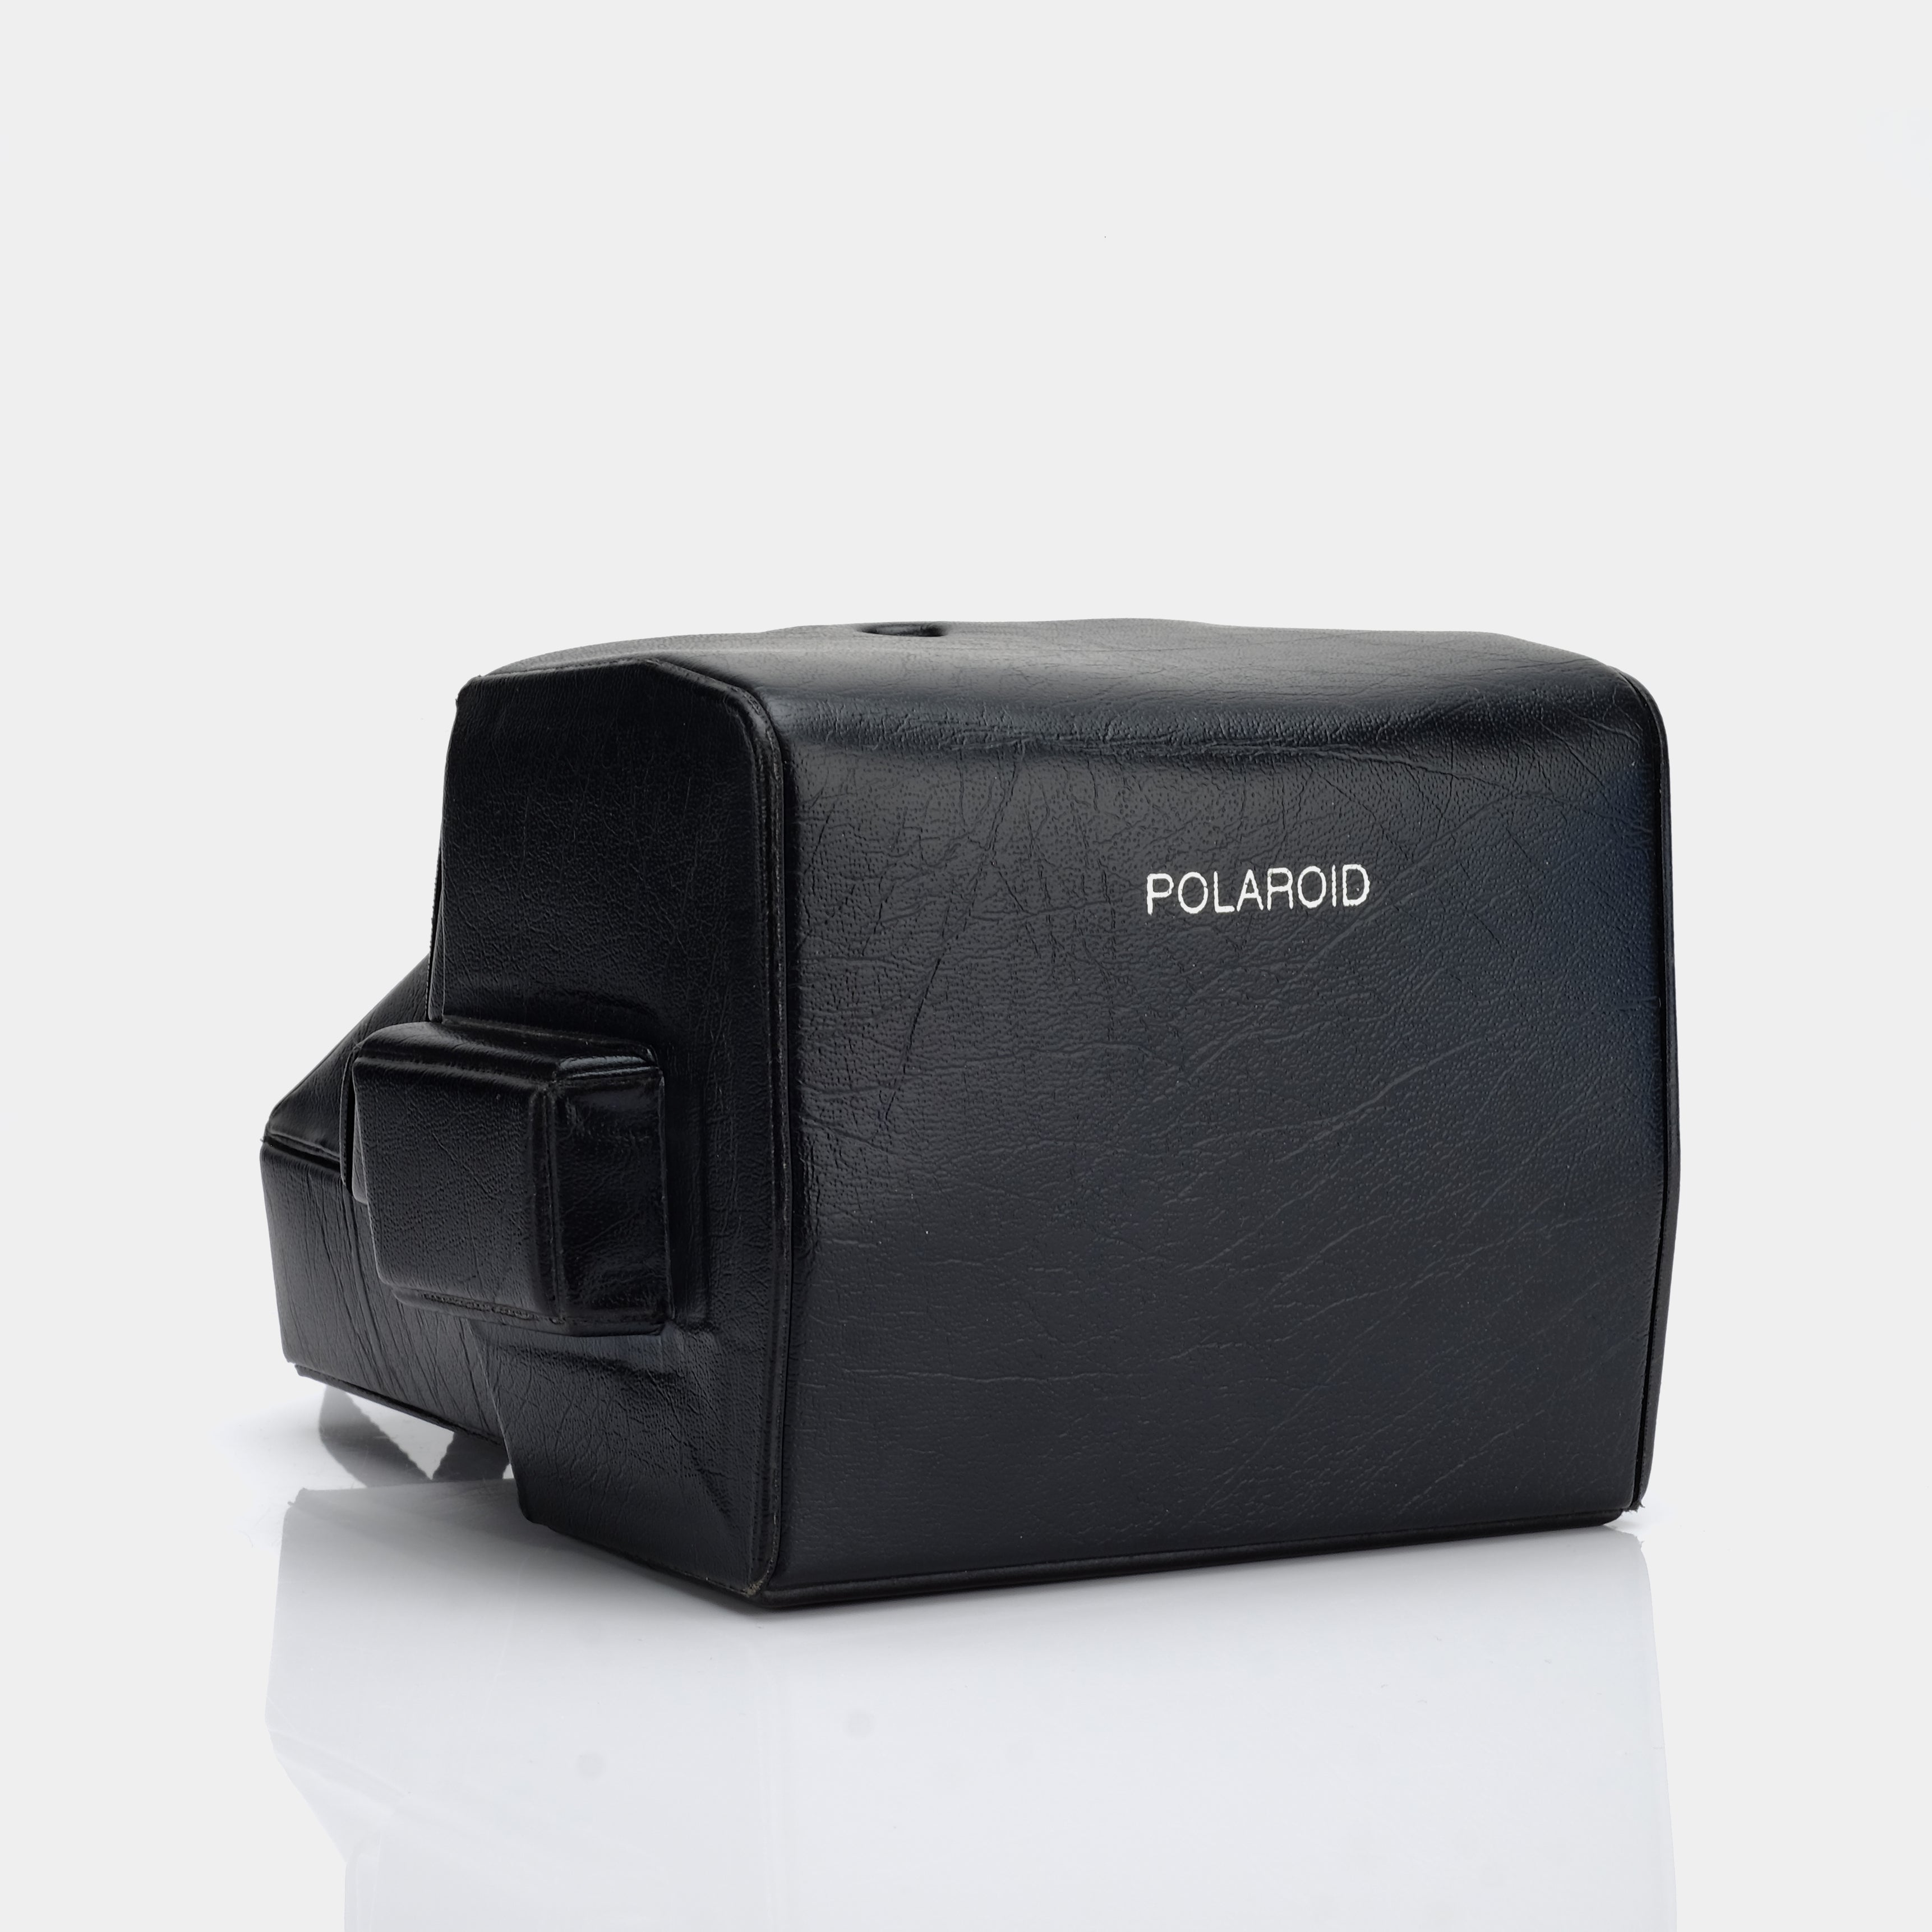 Polaroid Vinyl 600 Instant Camera Case